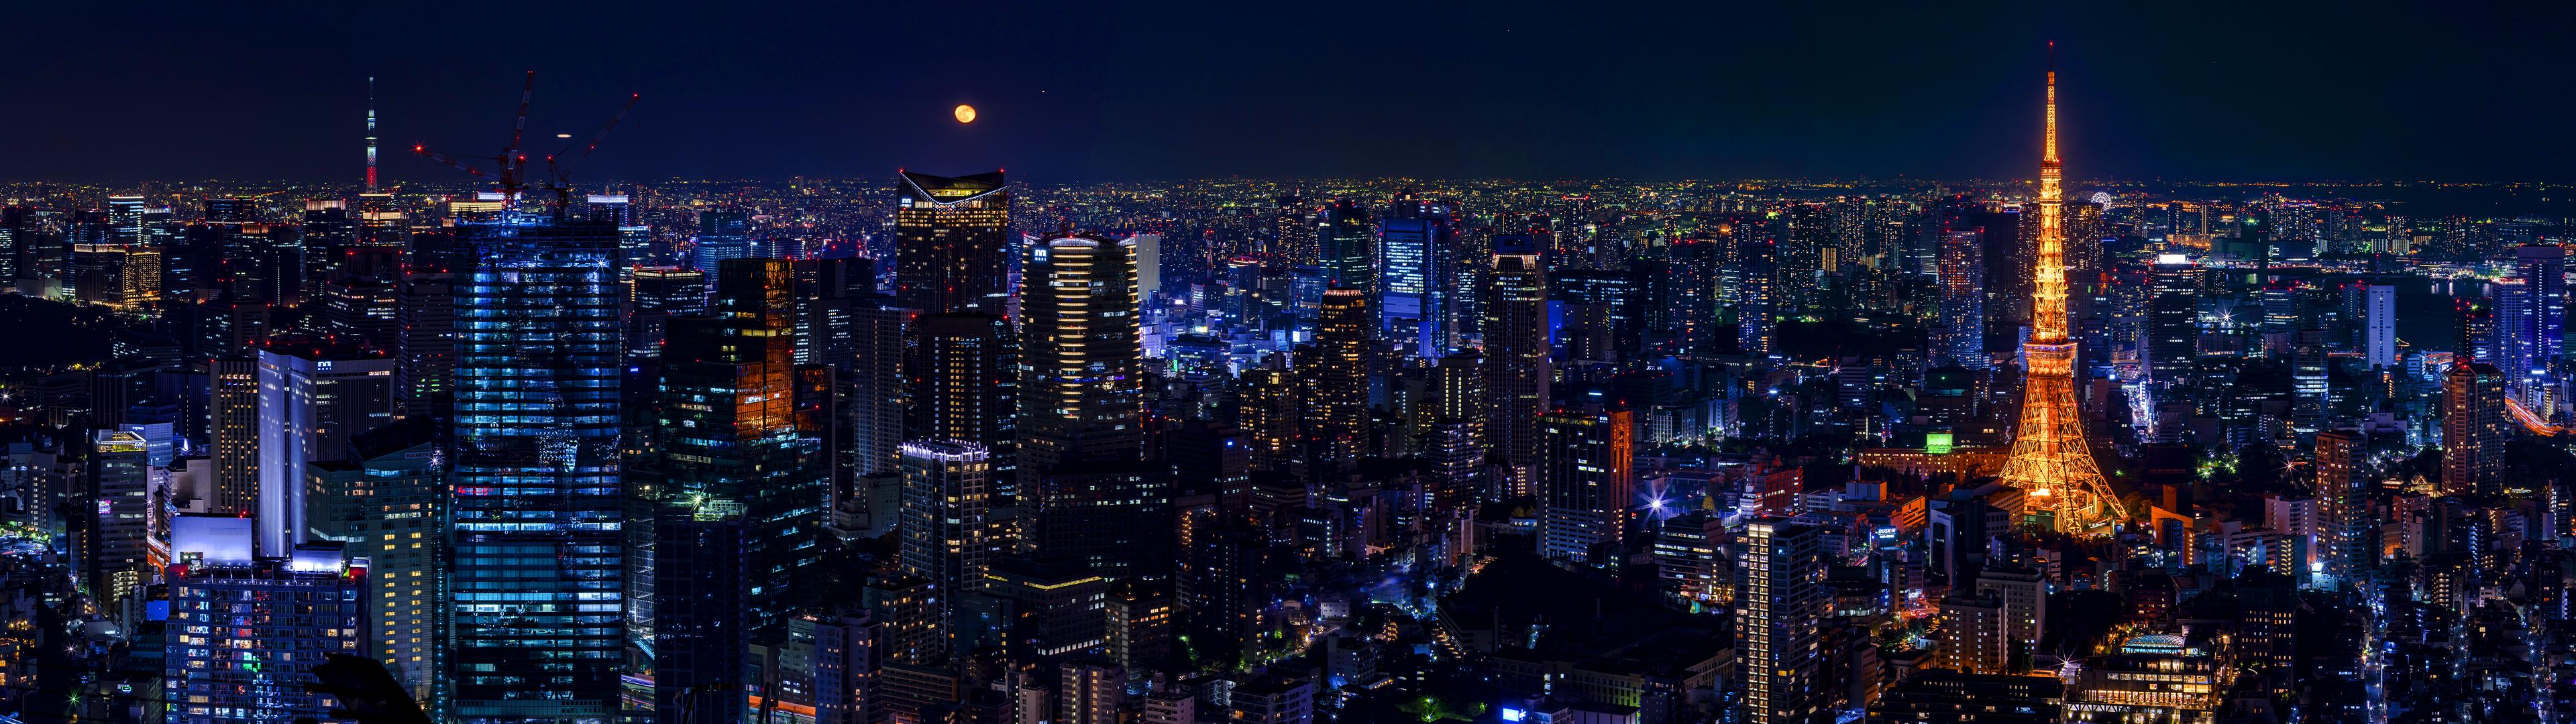 Tokyo HD Wallpaper